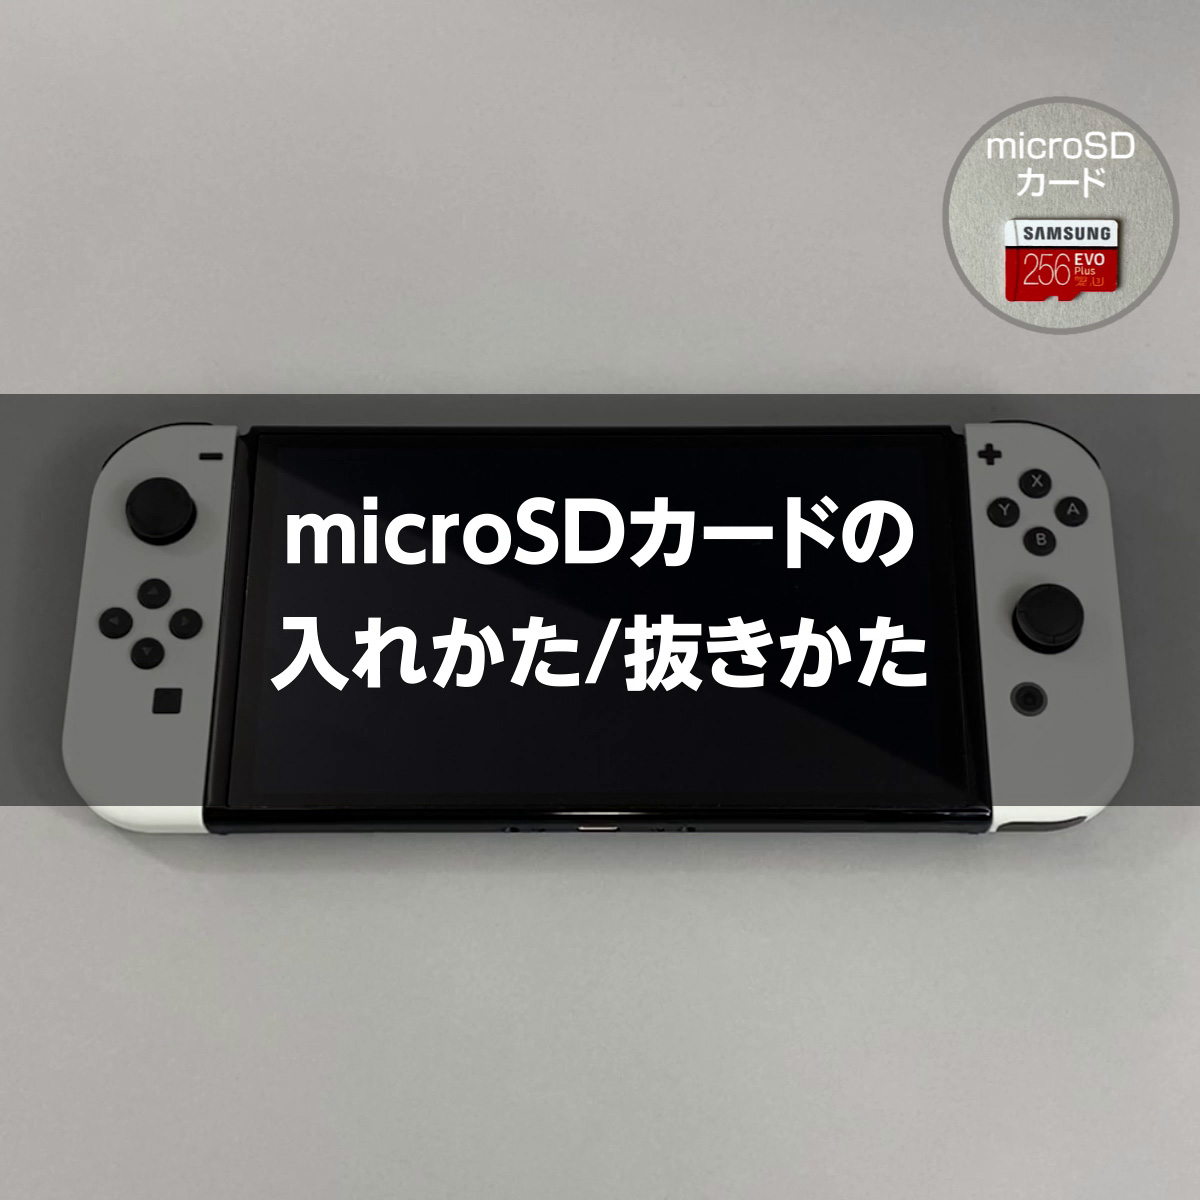 microSDカードについて｜Nintendo Switch サポート情報｜Nintendo